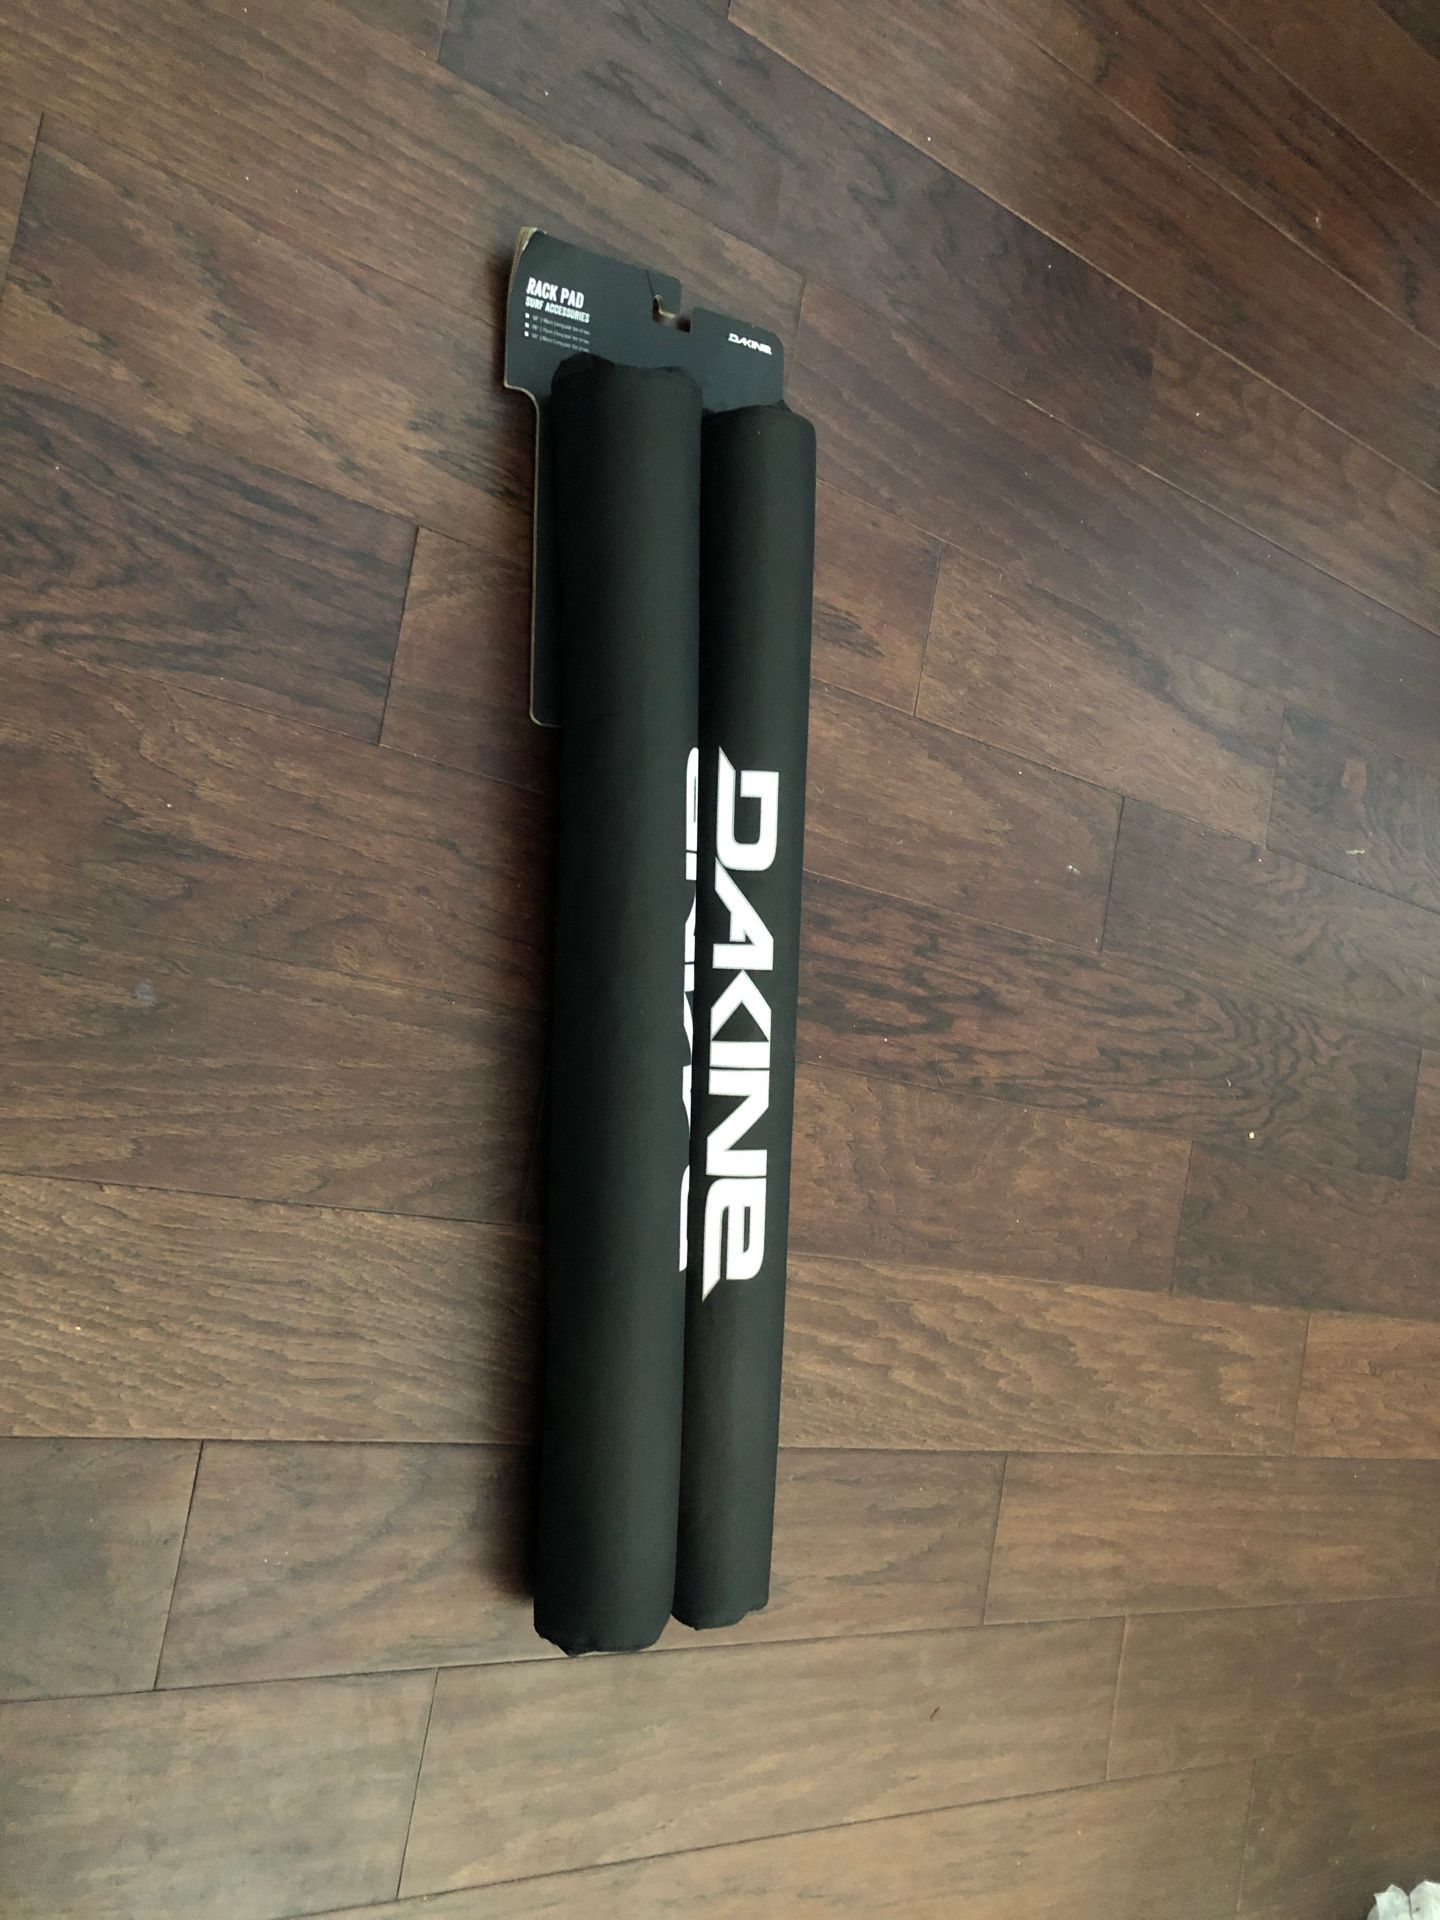 New Dakine 28” long round rack pads